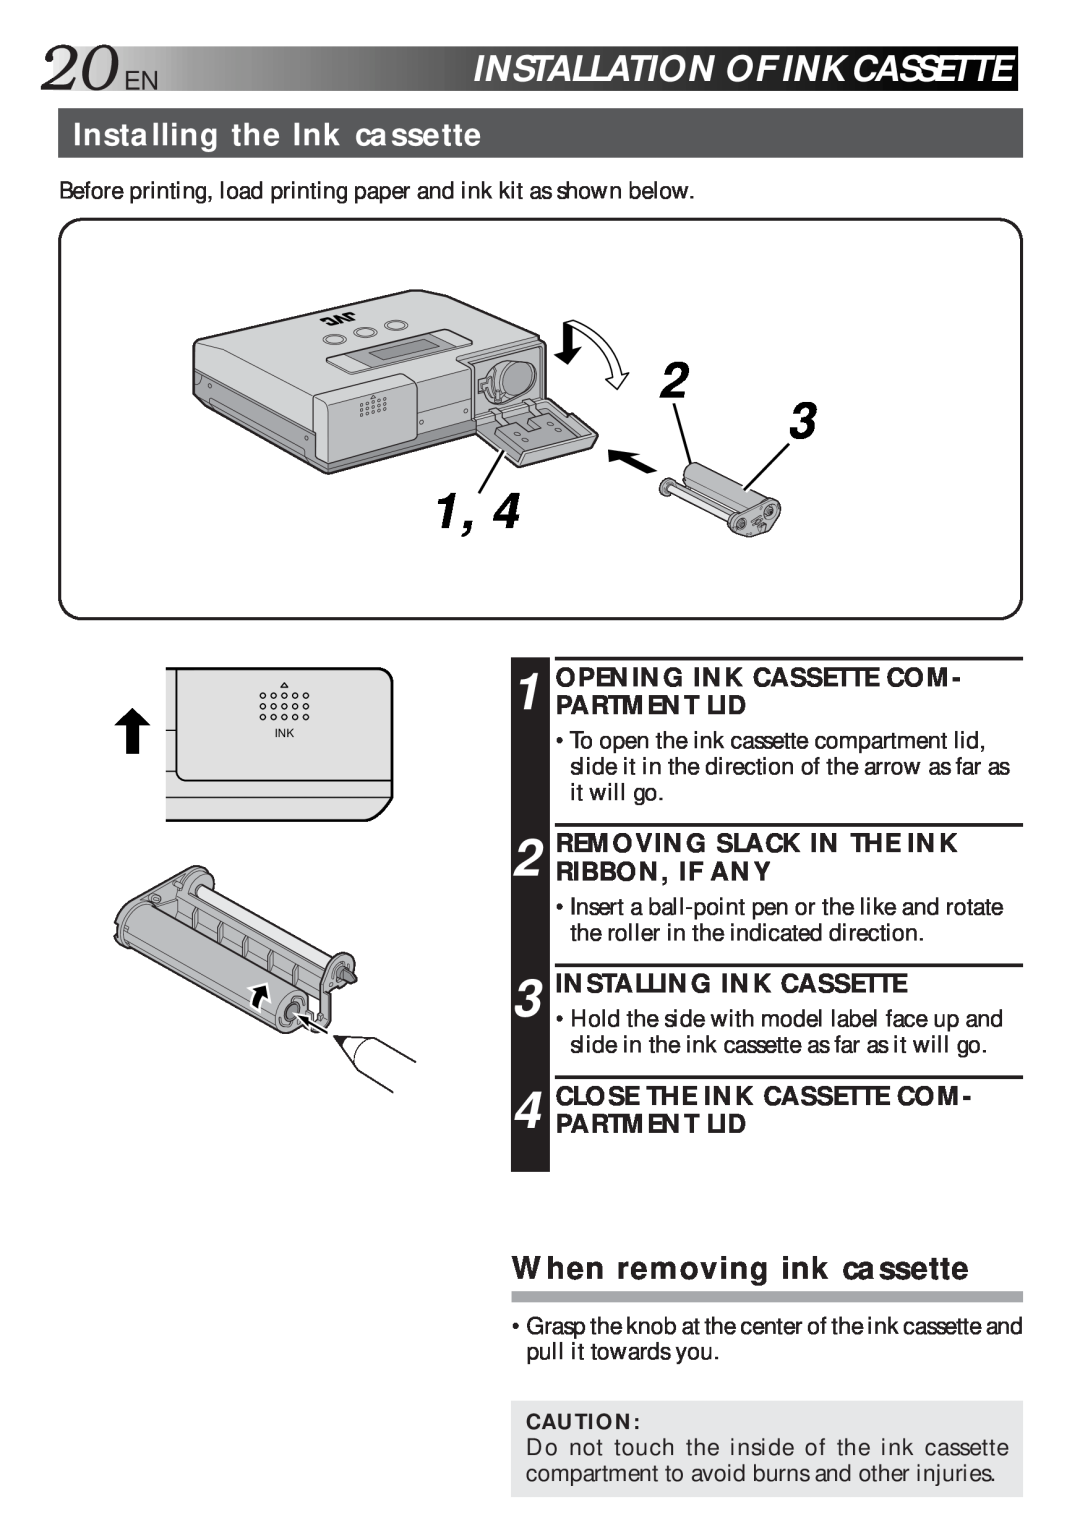 JVC GV-HT1U manual 20EN, Installationofinkcassette, Installing the Ink cassette 